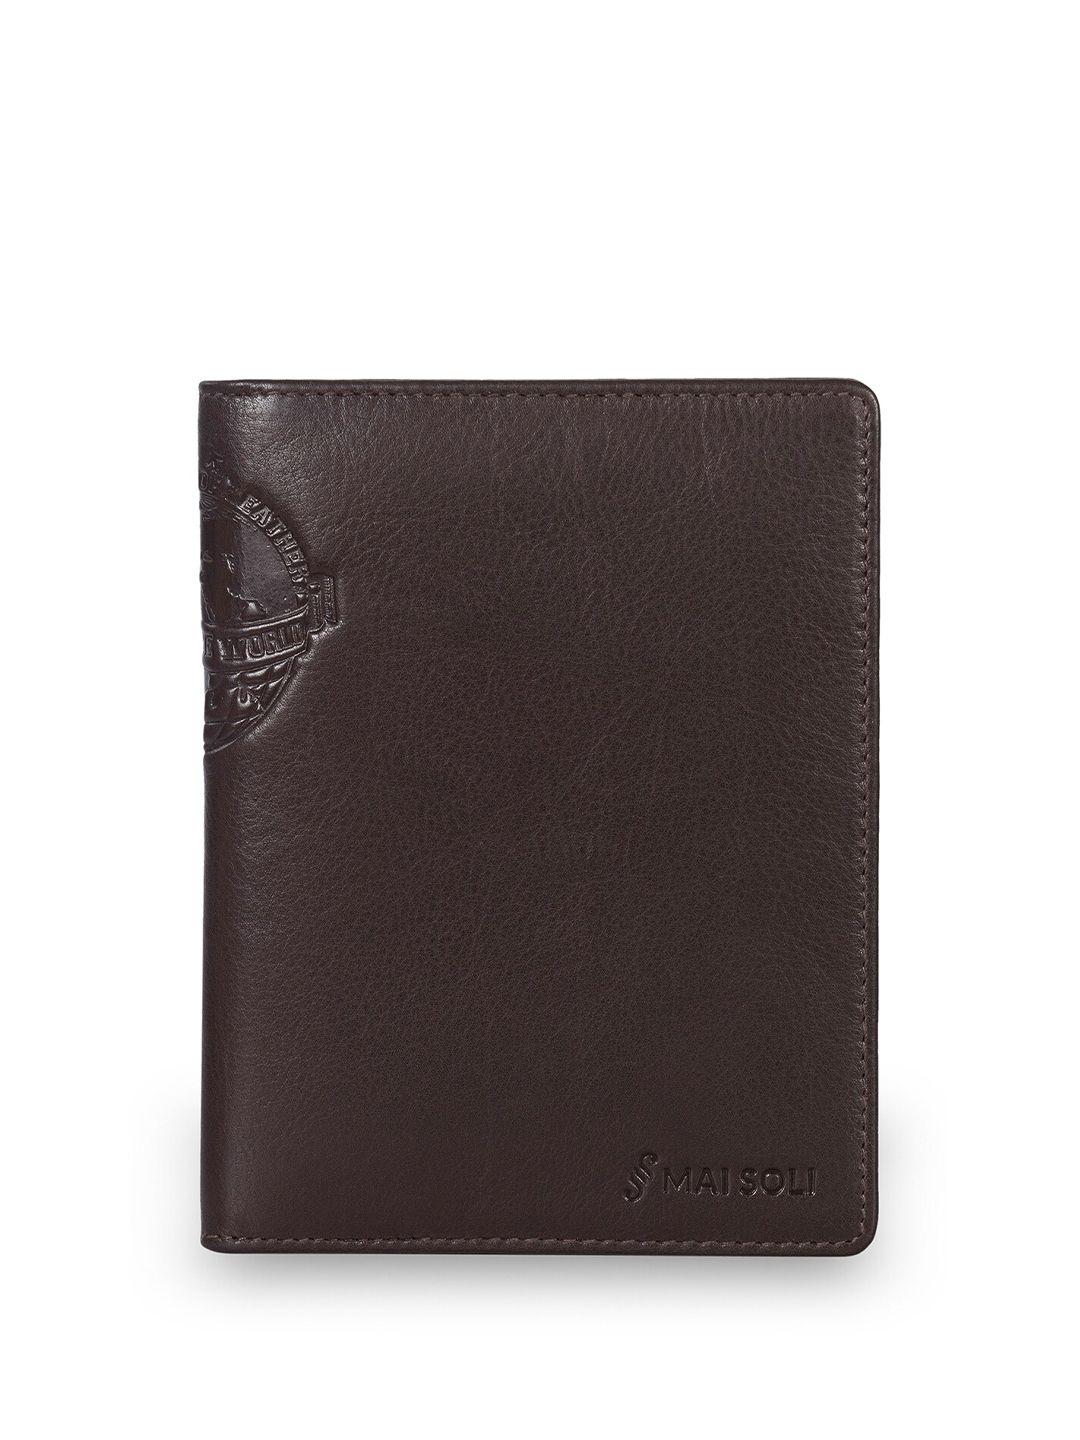 mai soli unisex textured genuine leather harbor travel wallet